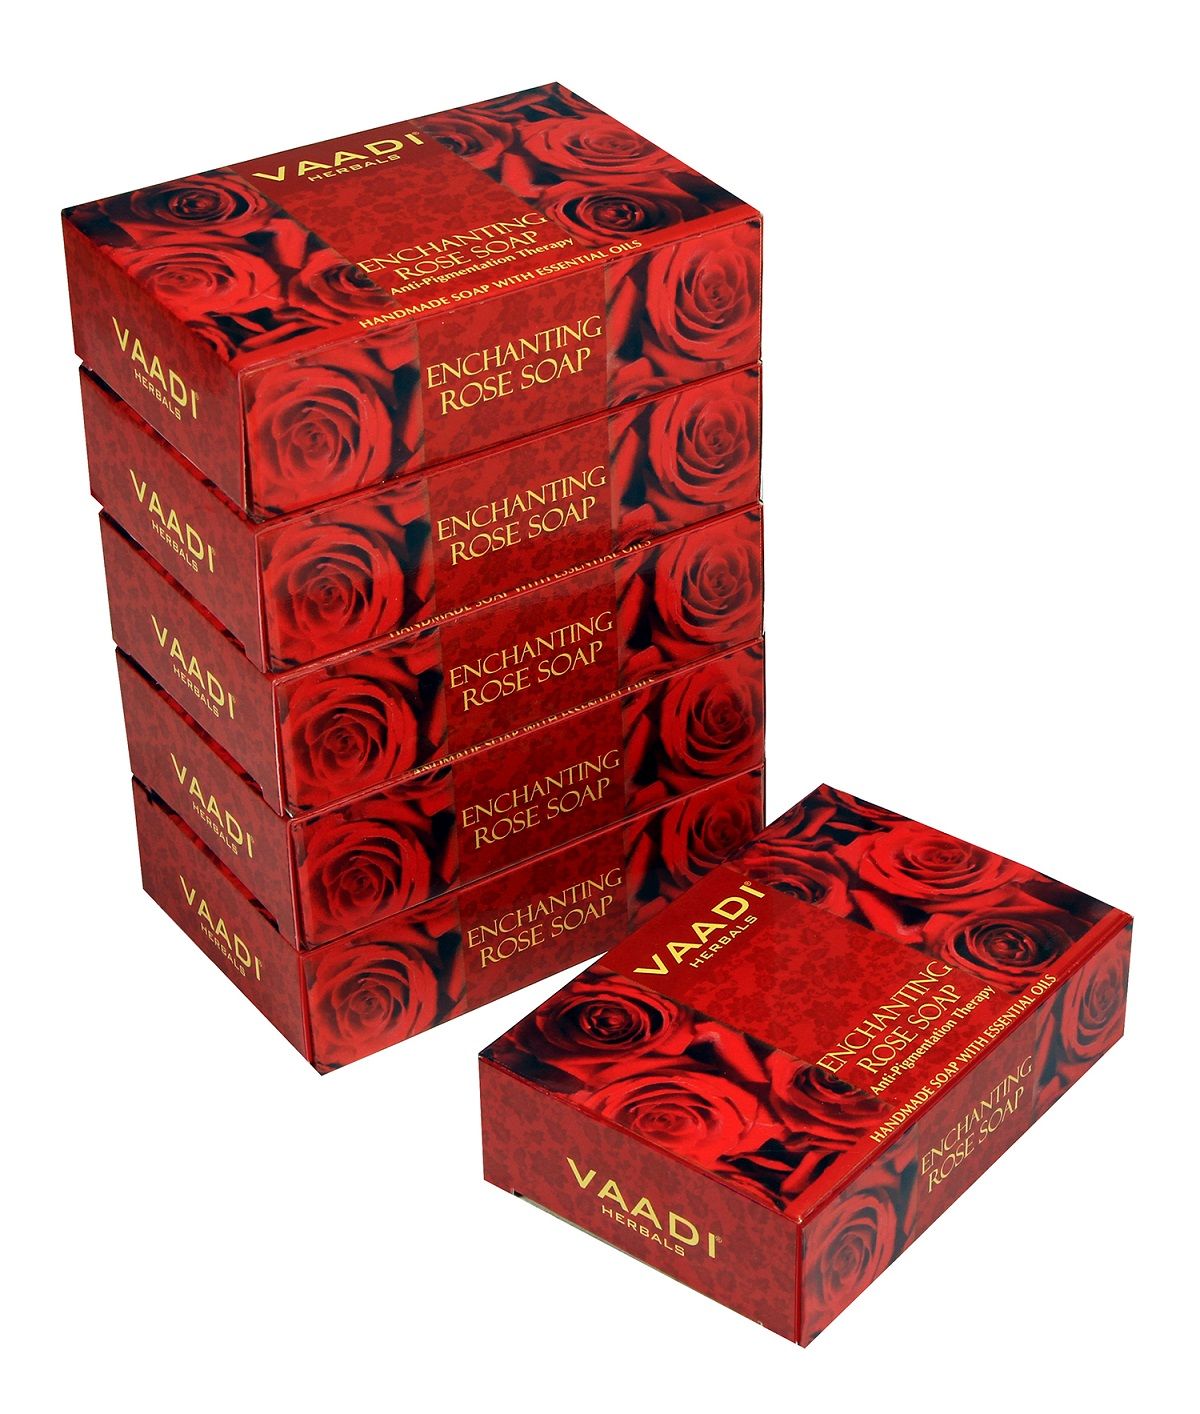 Vaadi Herbals Super Value Pack Of 6 Enchanting Rose Soaps